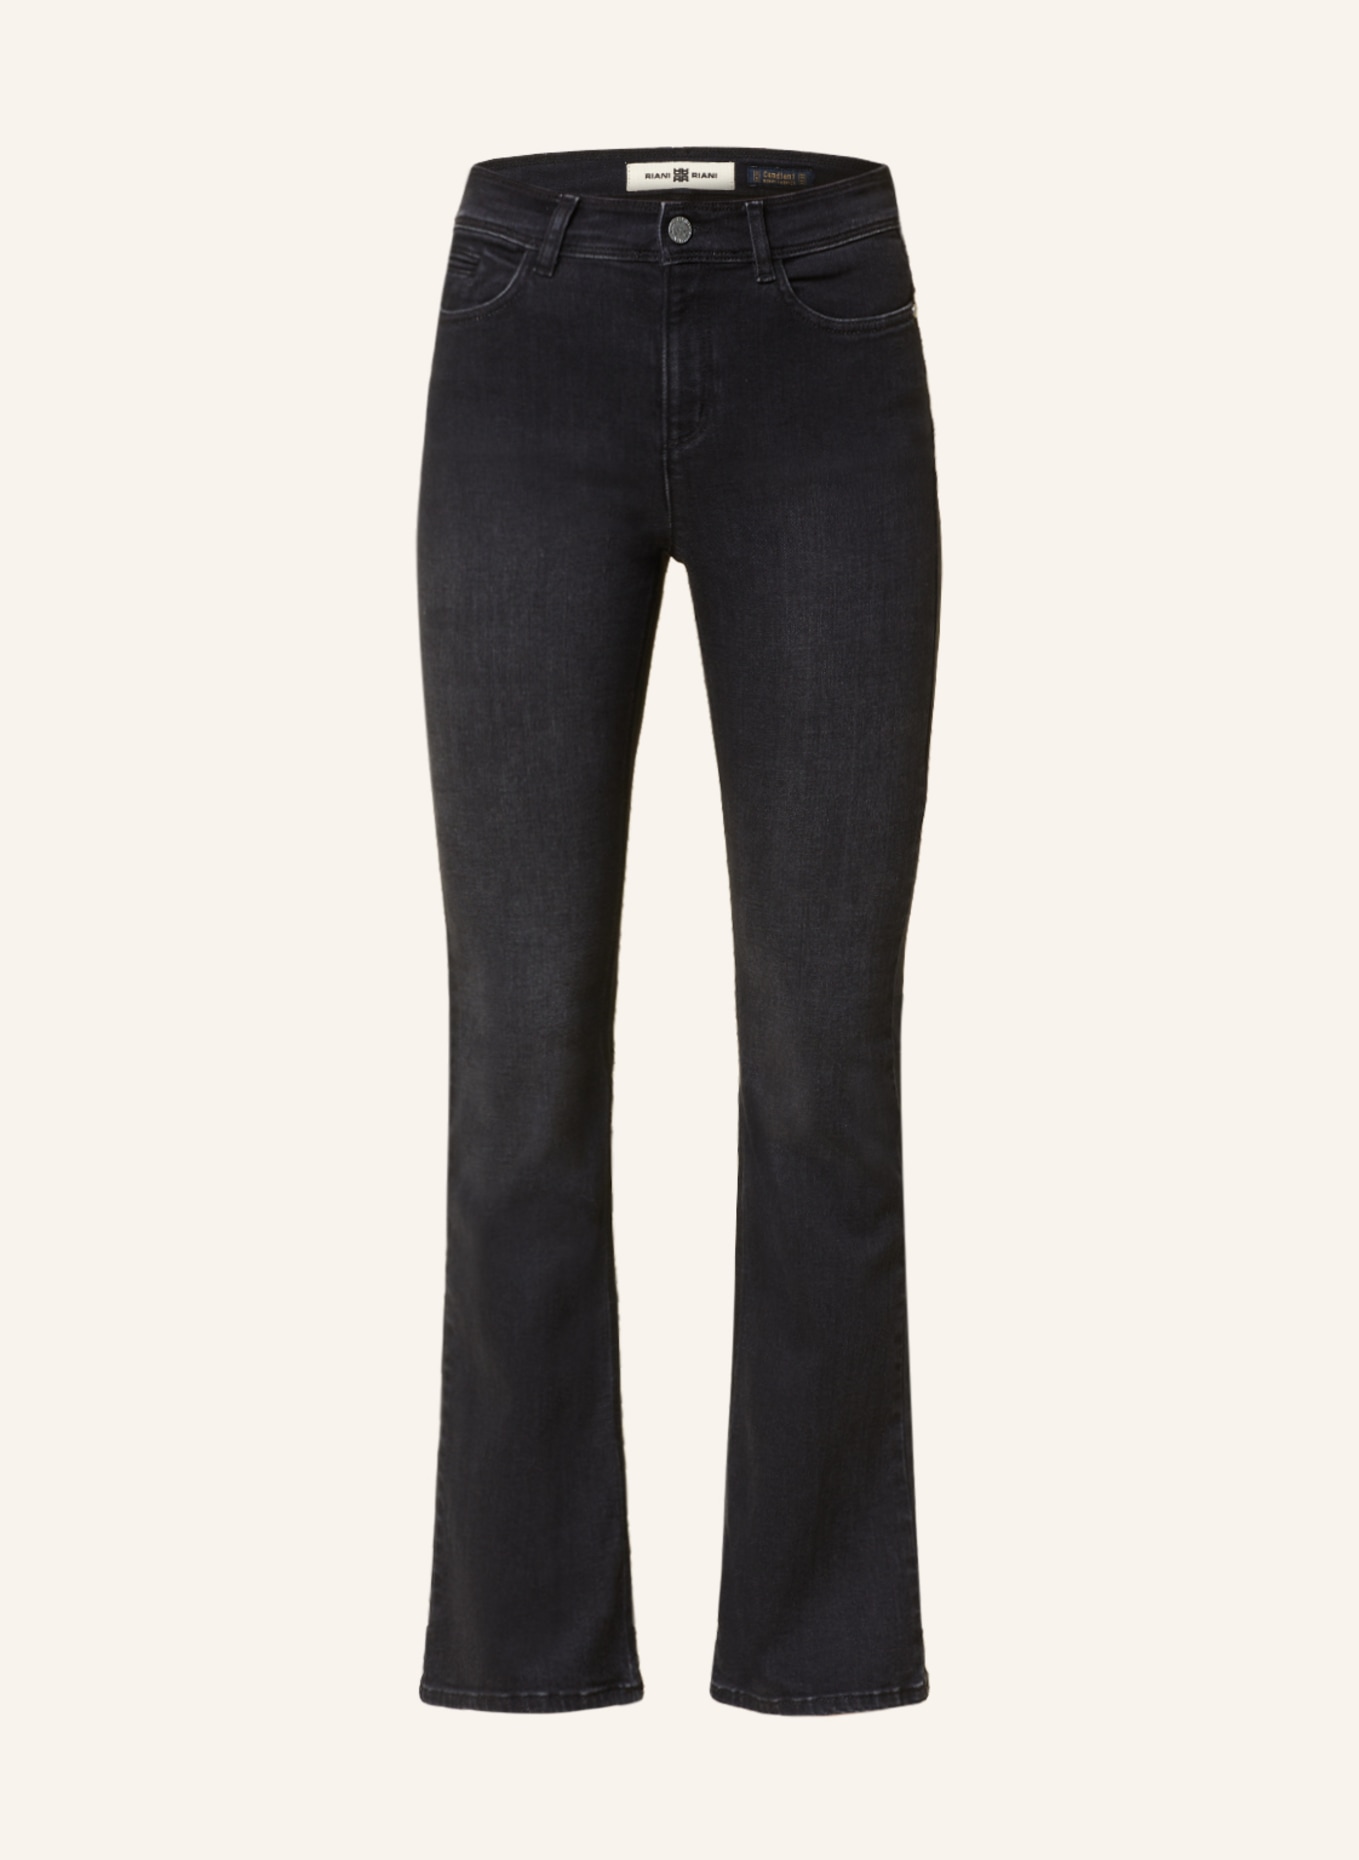 RIANI Bootcut Jeans , Farbe: 974 black used wash (Bild 1)